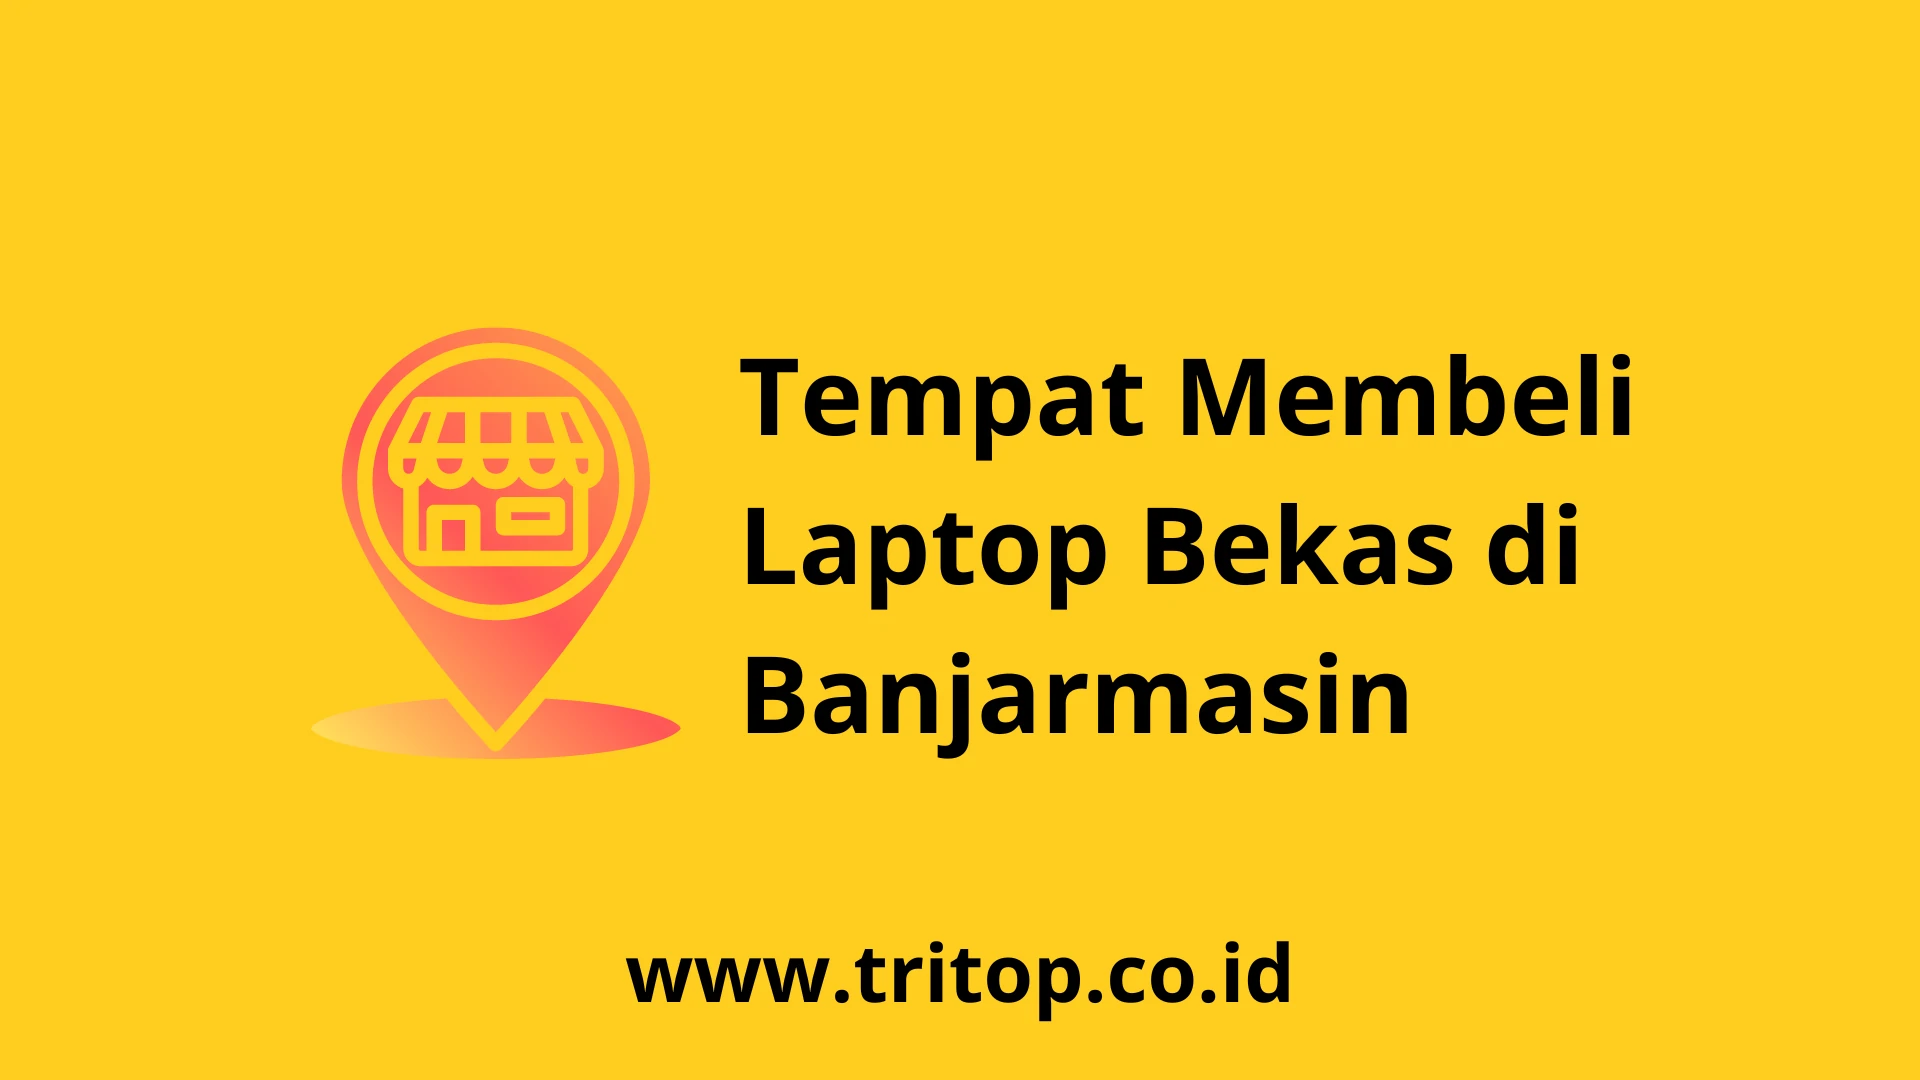 Laptop Bekas Banjarmasin Tritop.co.id